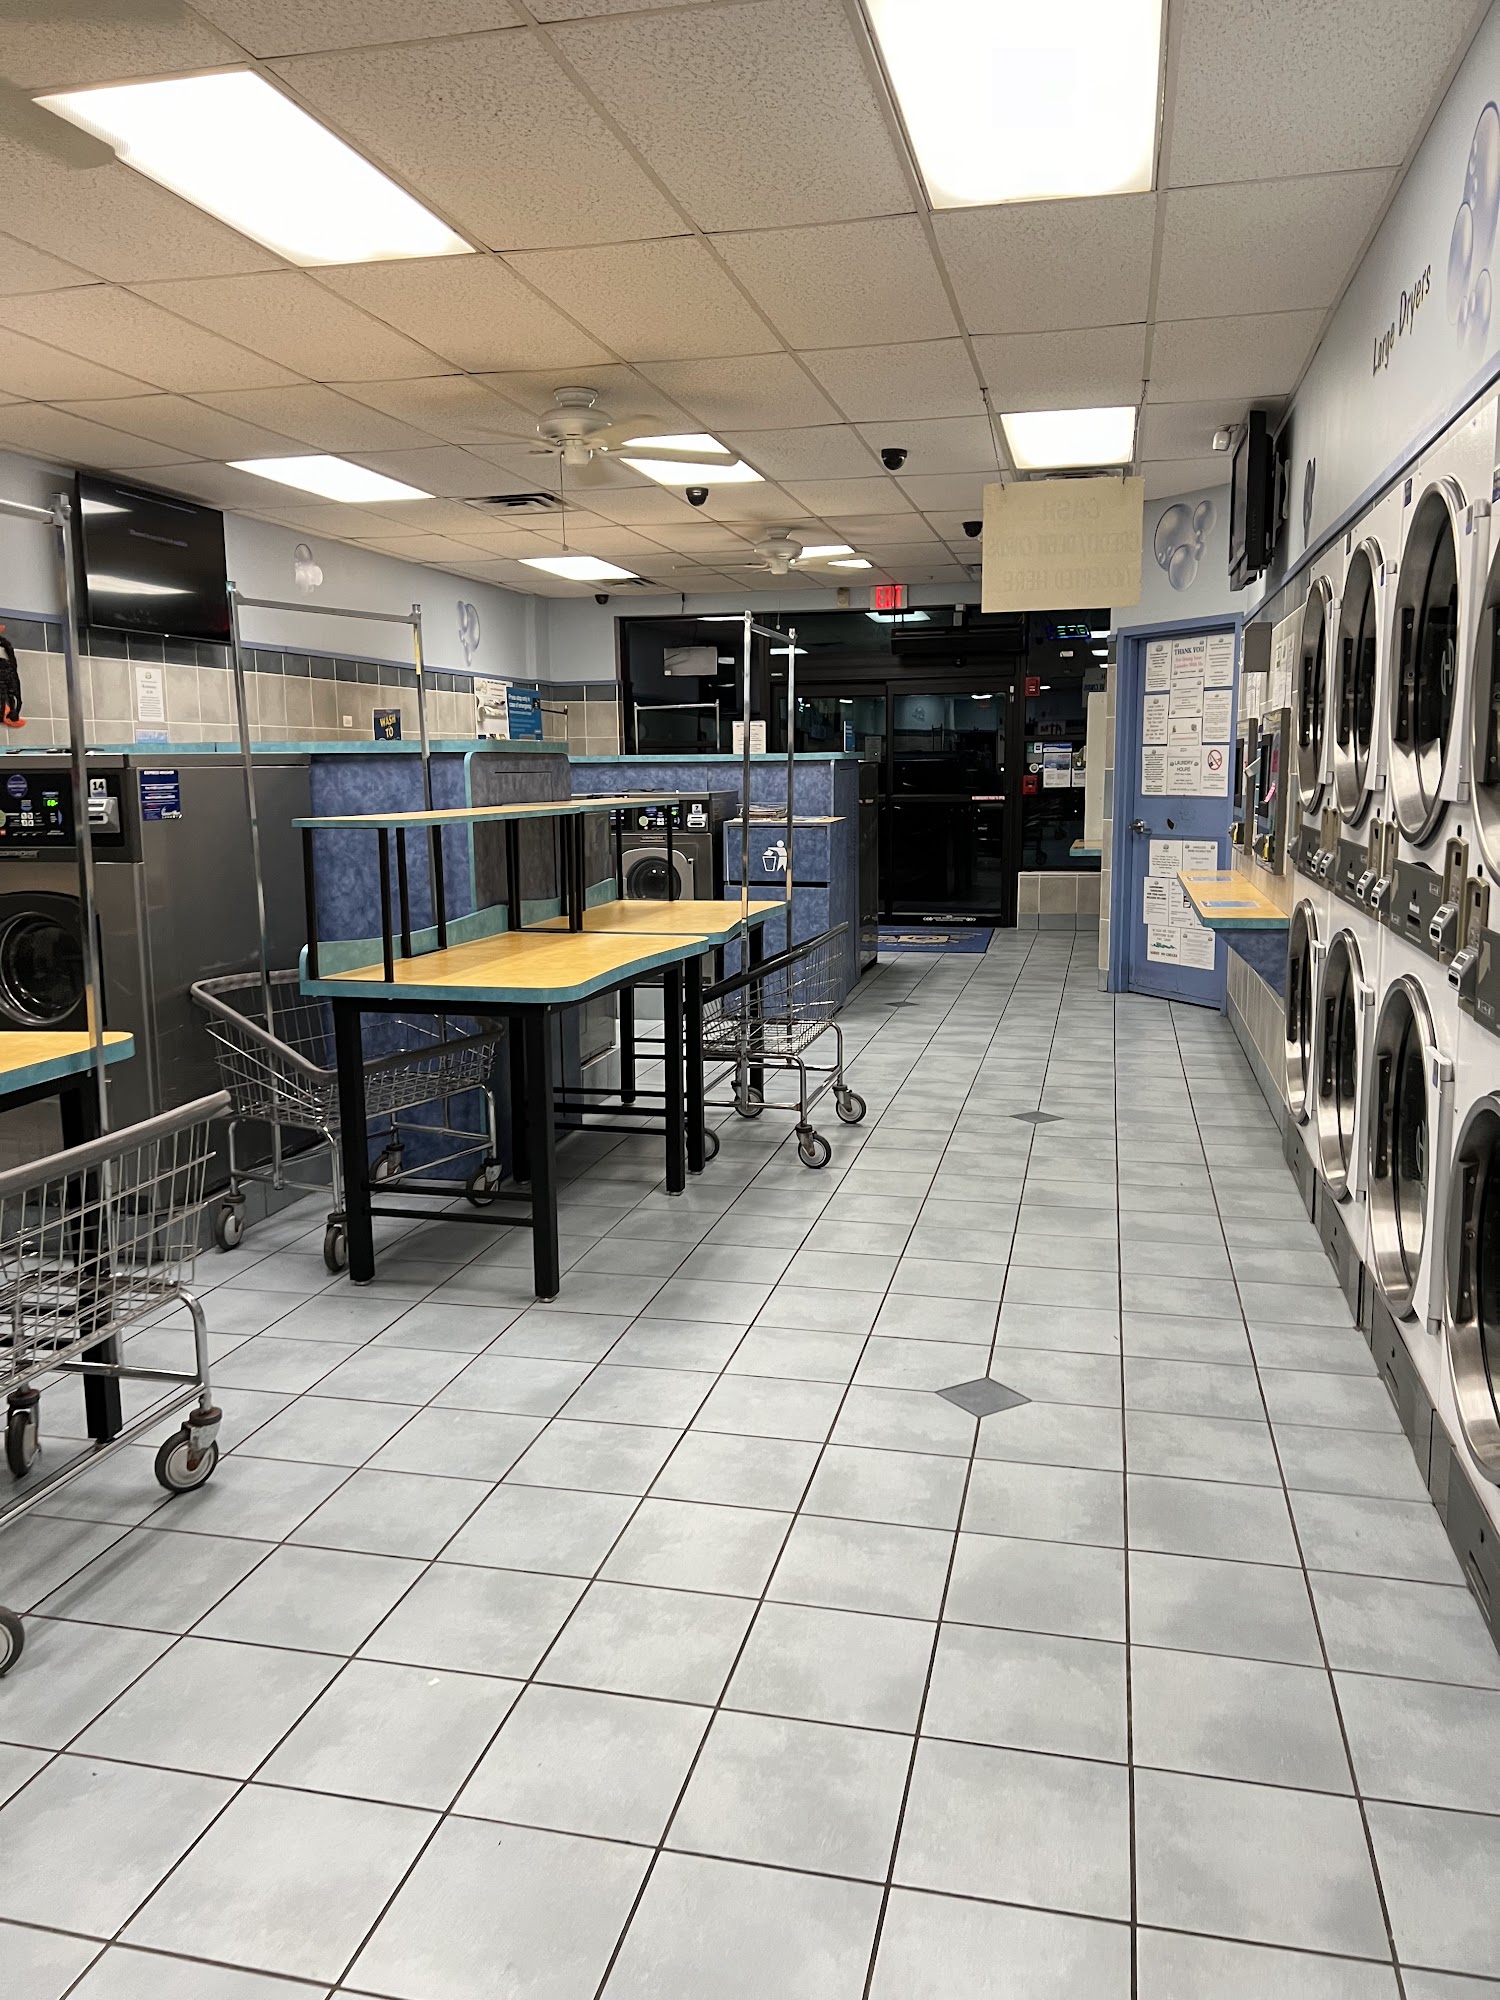 Soap Opera Laundromat - Plainfield